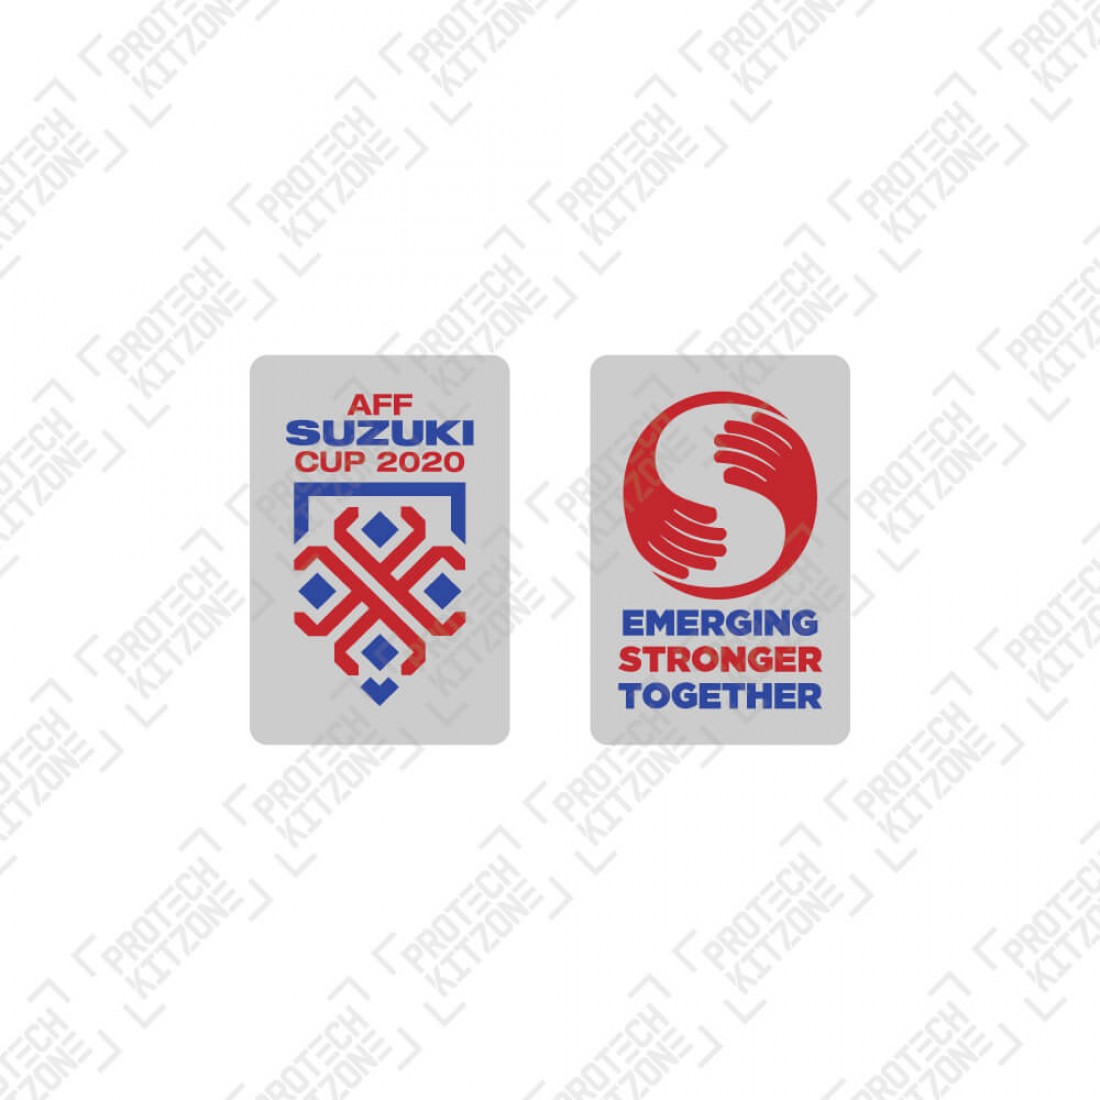 Official AFF Suzuki Cup 2020 + Emerging Stronger Together Sleeve Badges, Official Asia Football Badges, AFFSUZUKI2020,